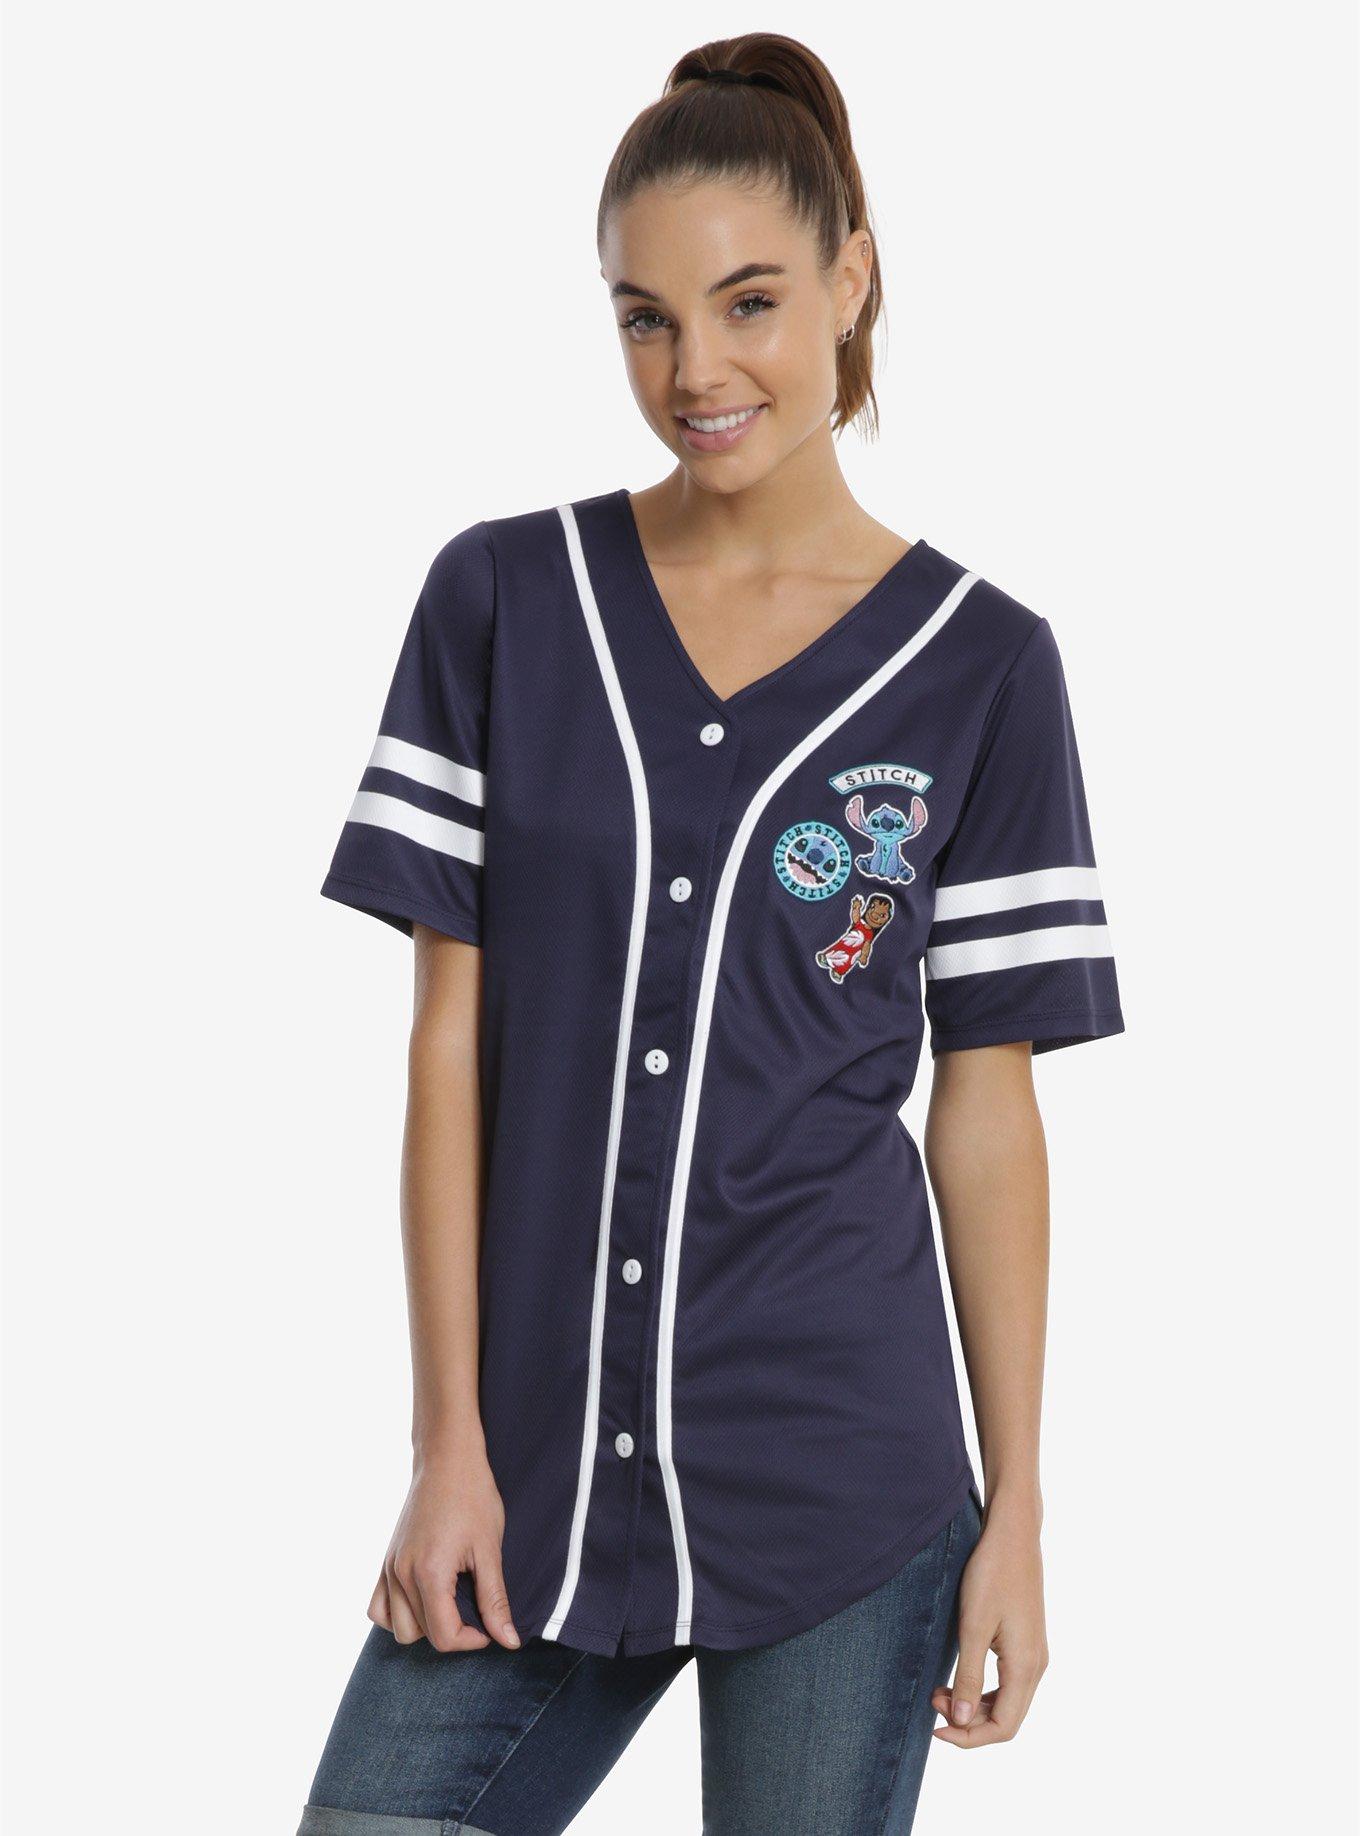 Stitch And Lilo Disney Baseball Jerseys For Men And Women